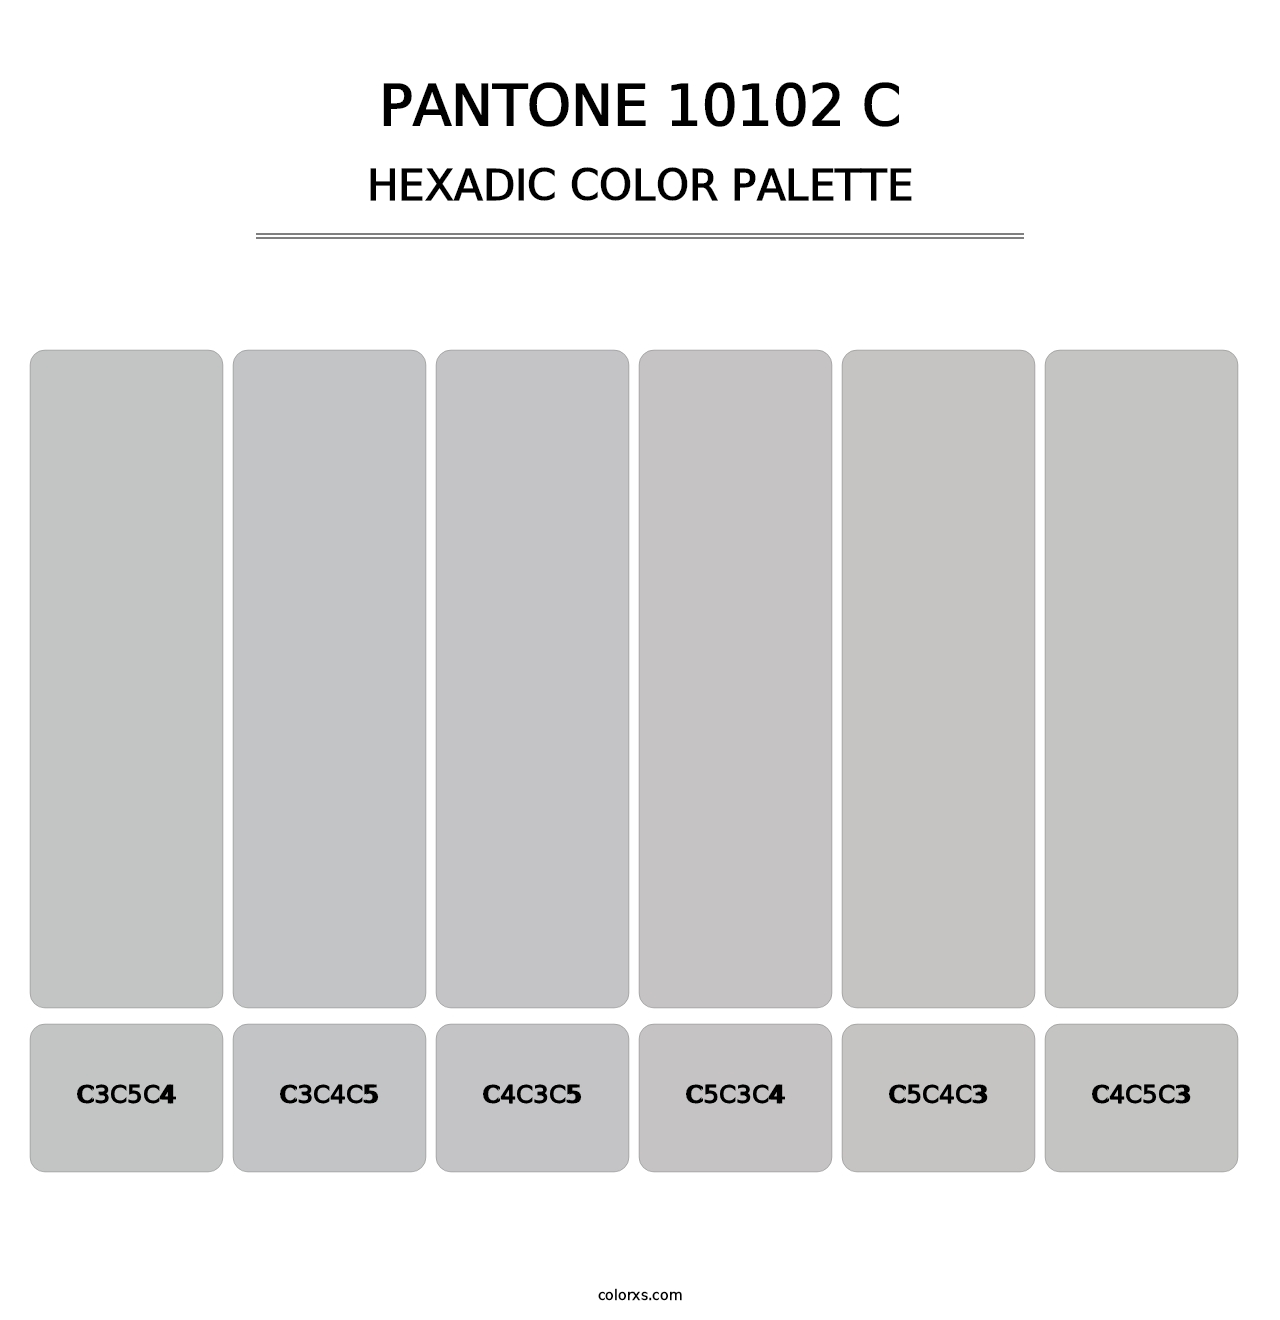 PANTONE 10102 C - Hexadic Color Palette